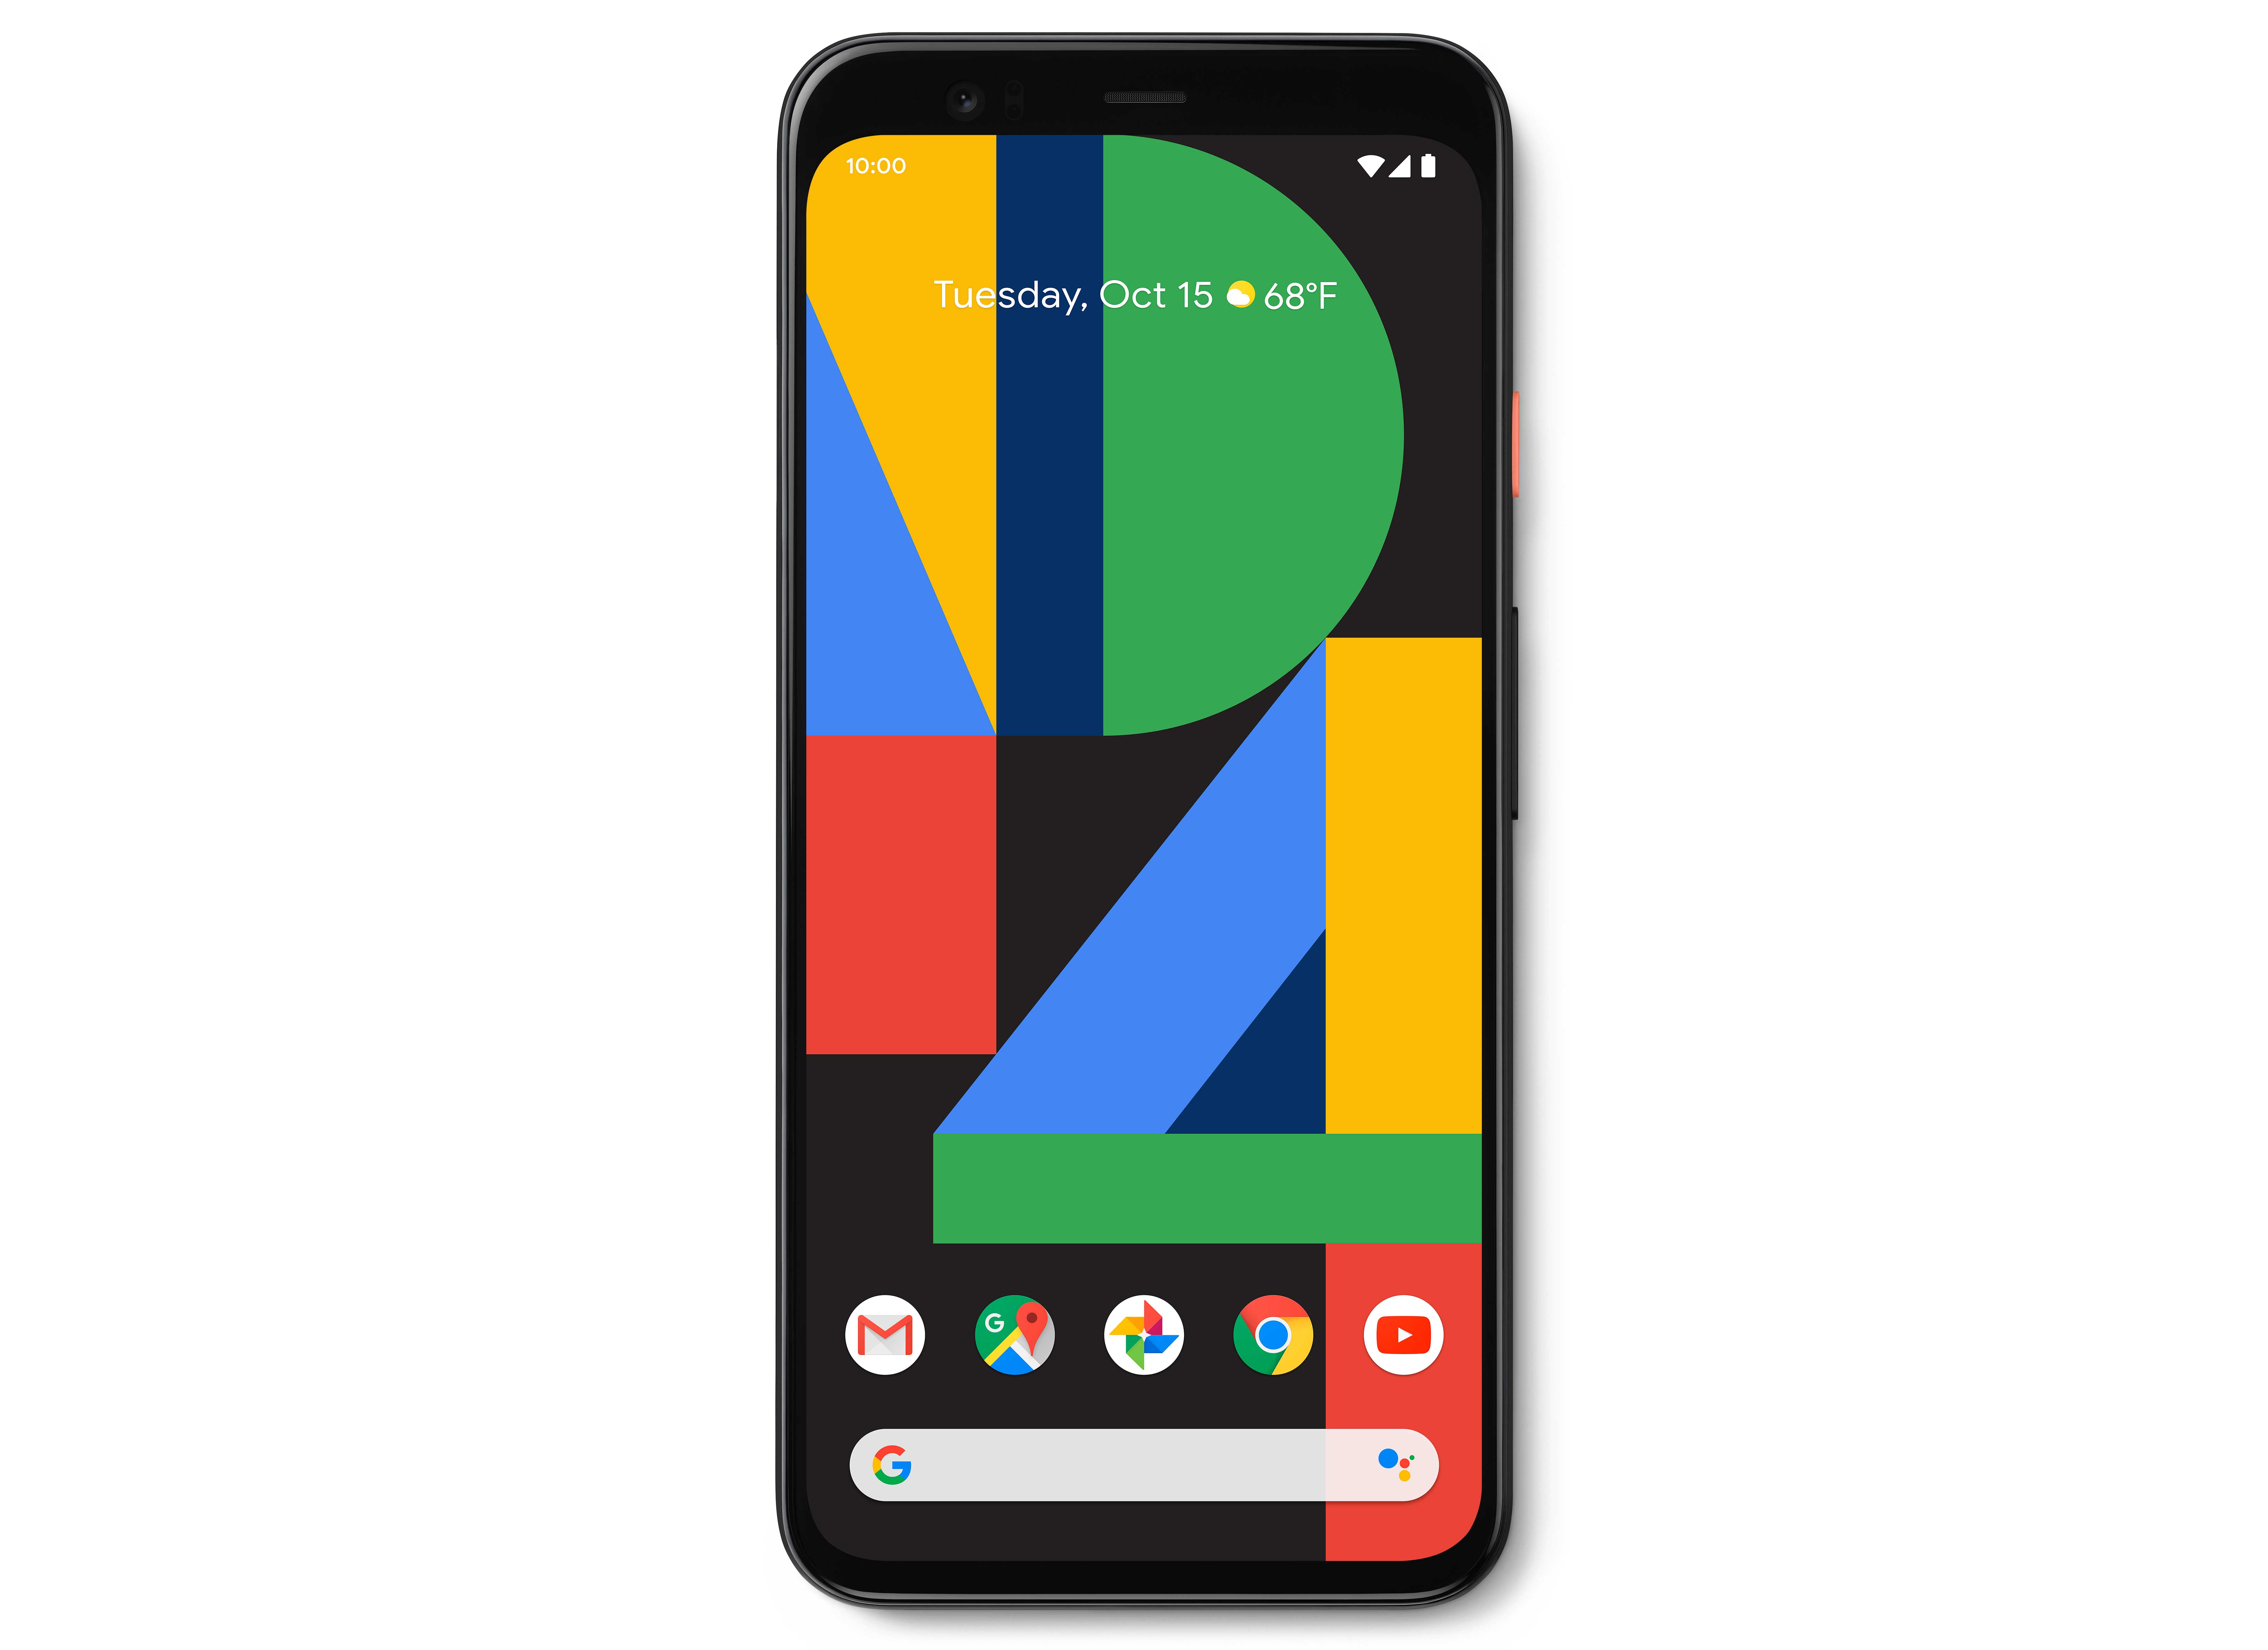 The Google Pixel 4 smartphone (Google/PA)